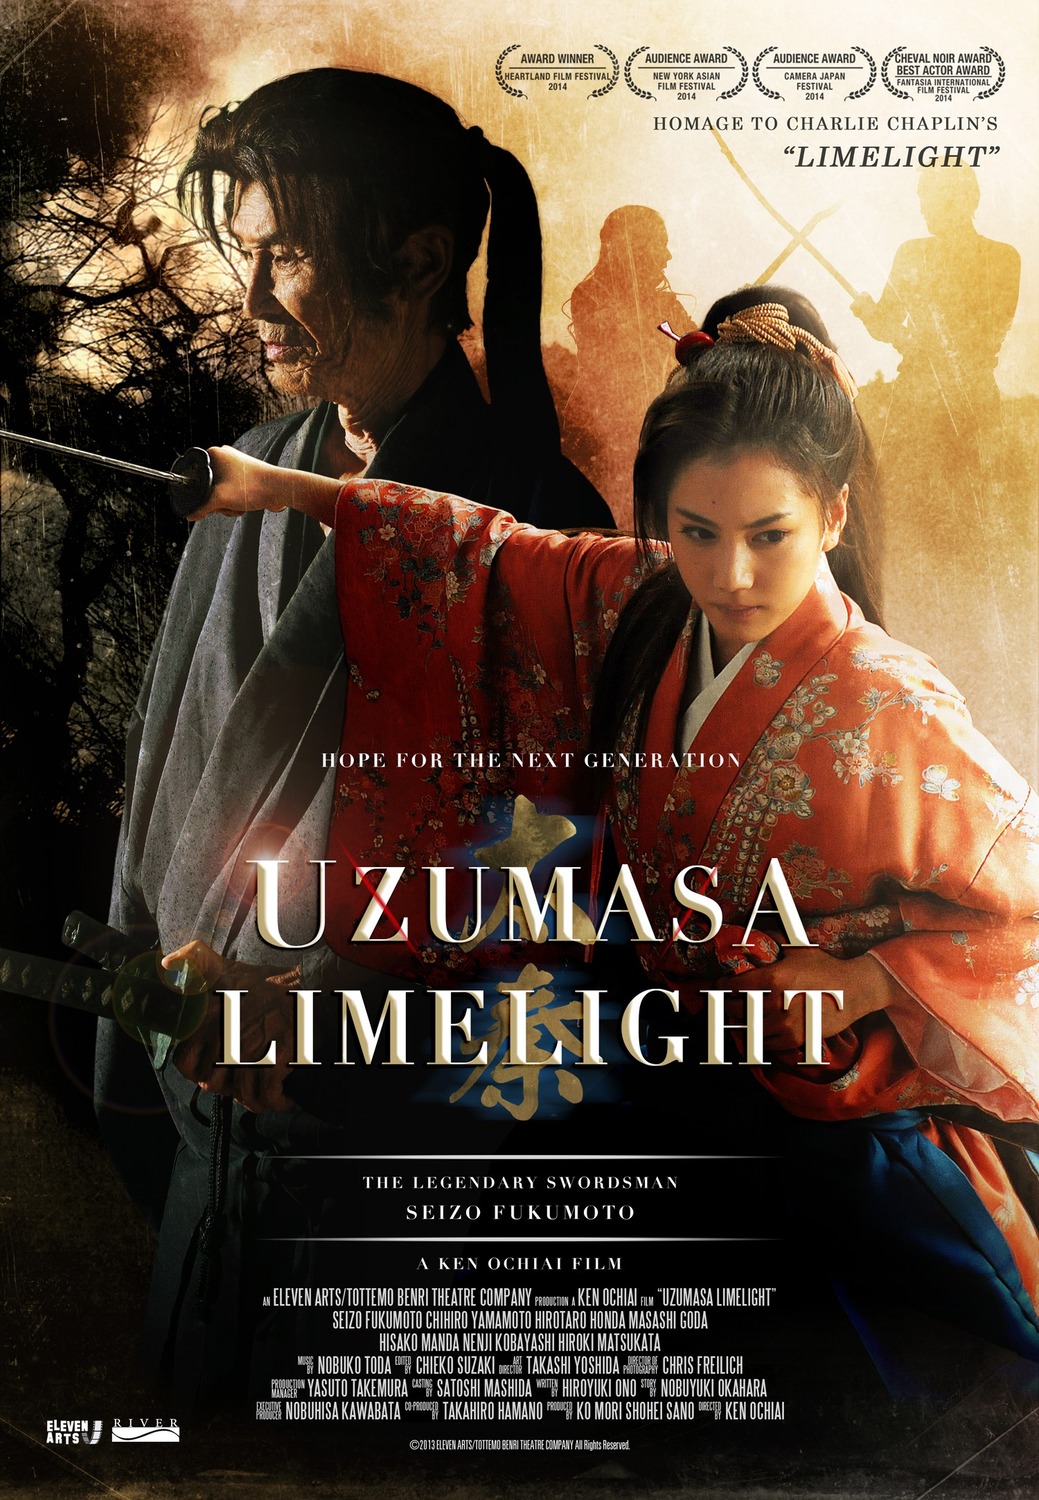 Extra Large Movie Poster Image for Uzumasa raimuraito (#2 of 2)